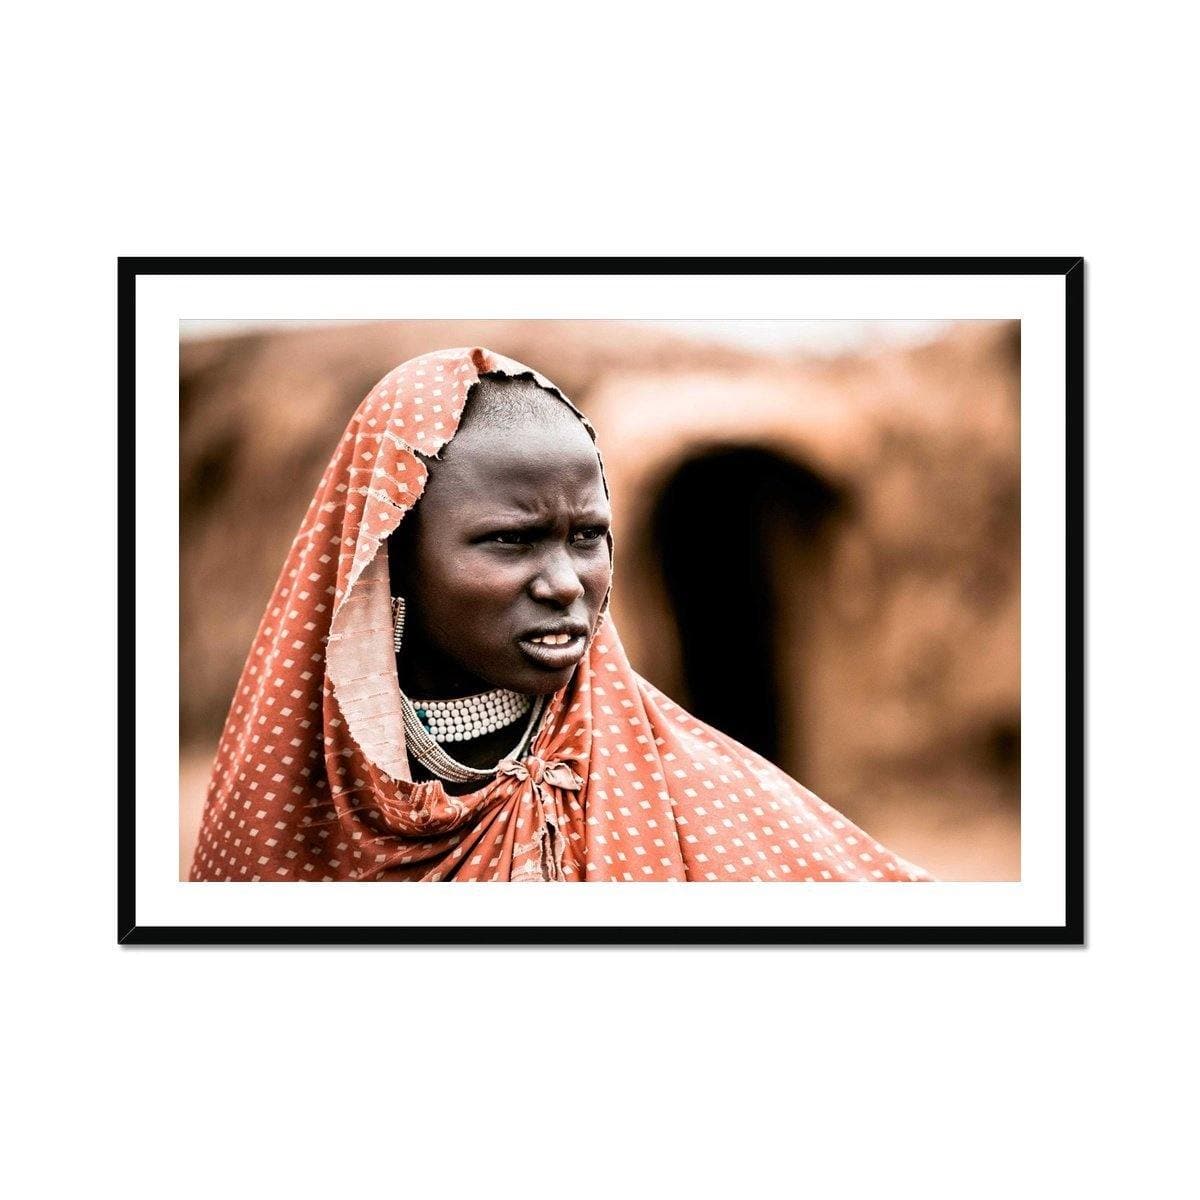 Maasai Girl - Sean Lee-Davies Sean Lee Davies